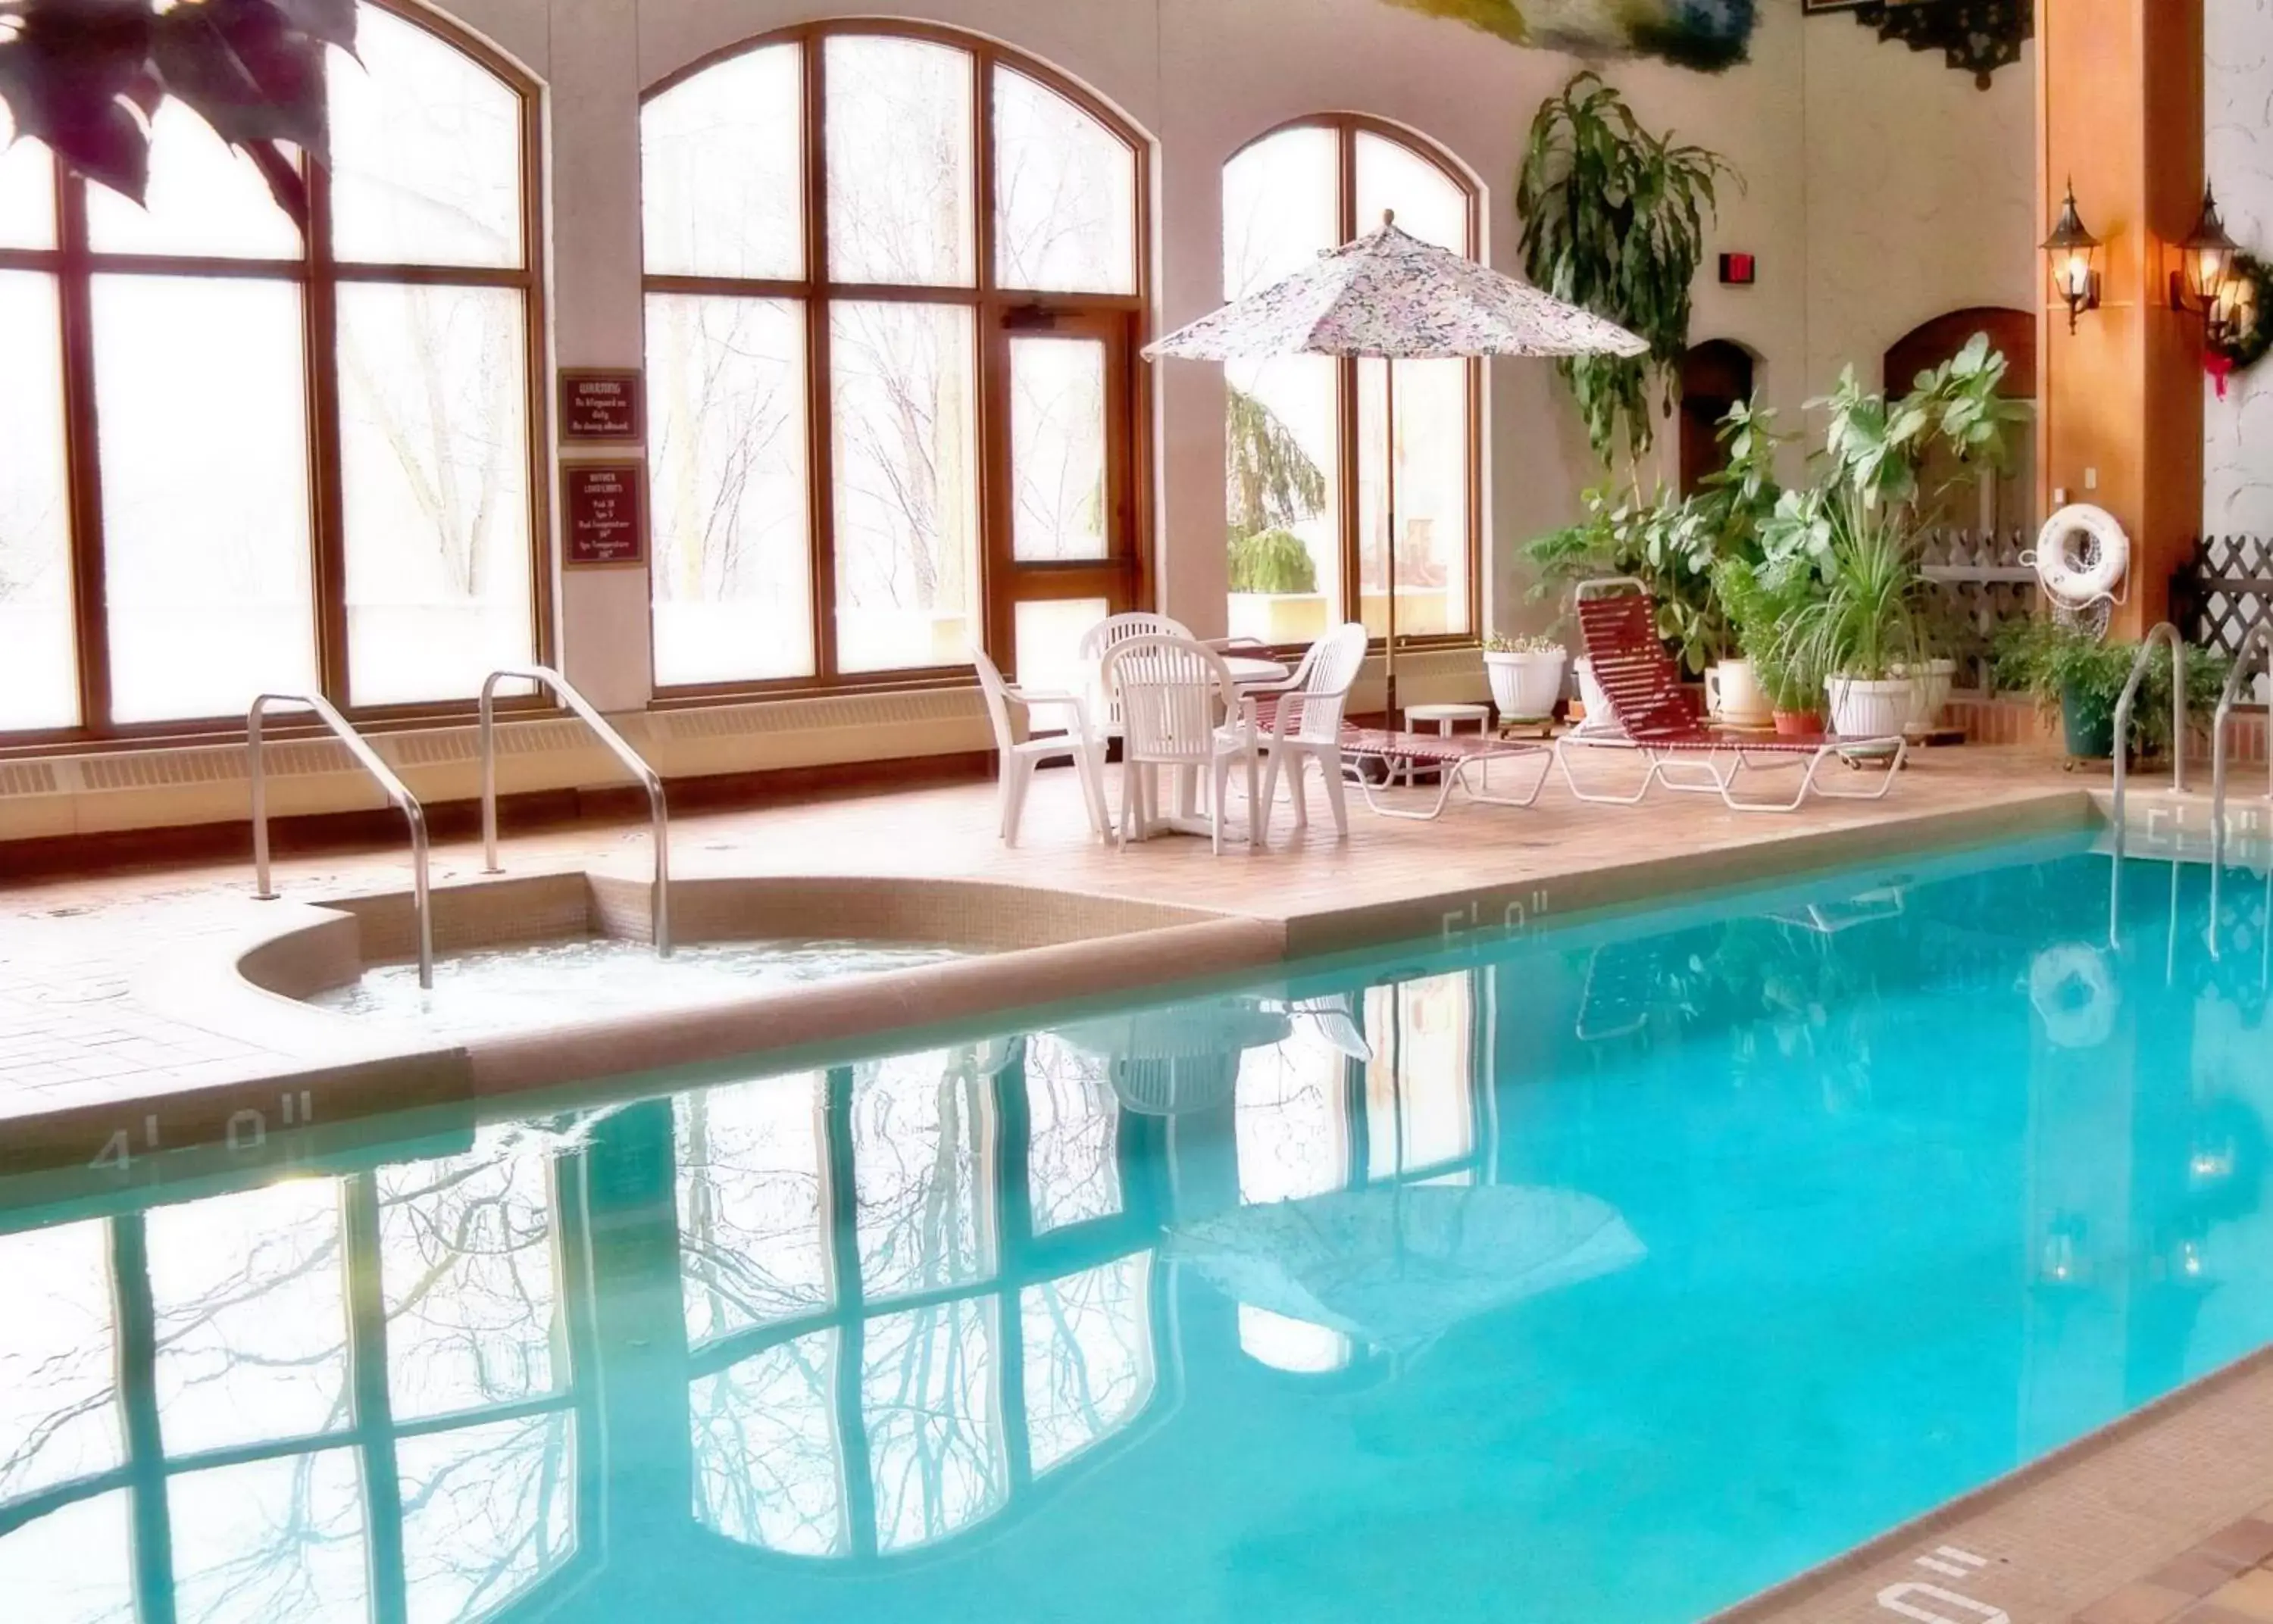 Swimming Pool in Bavarian Inn Lodge